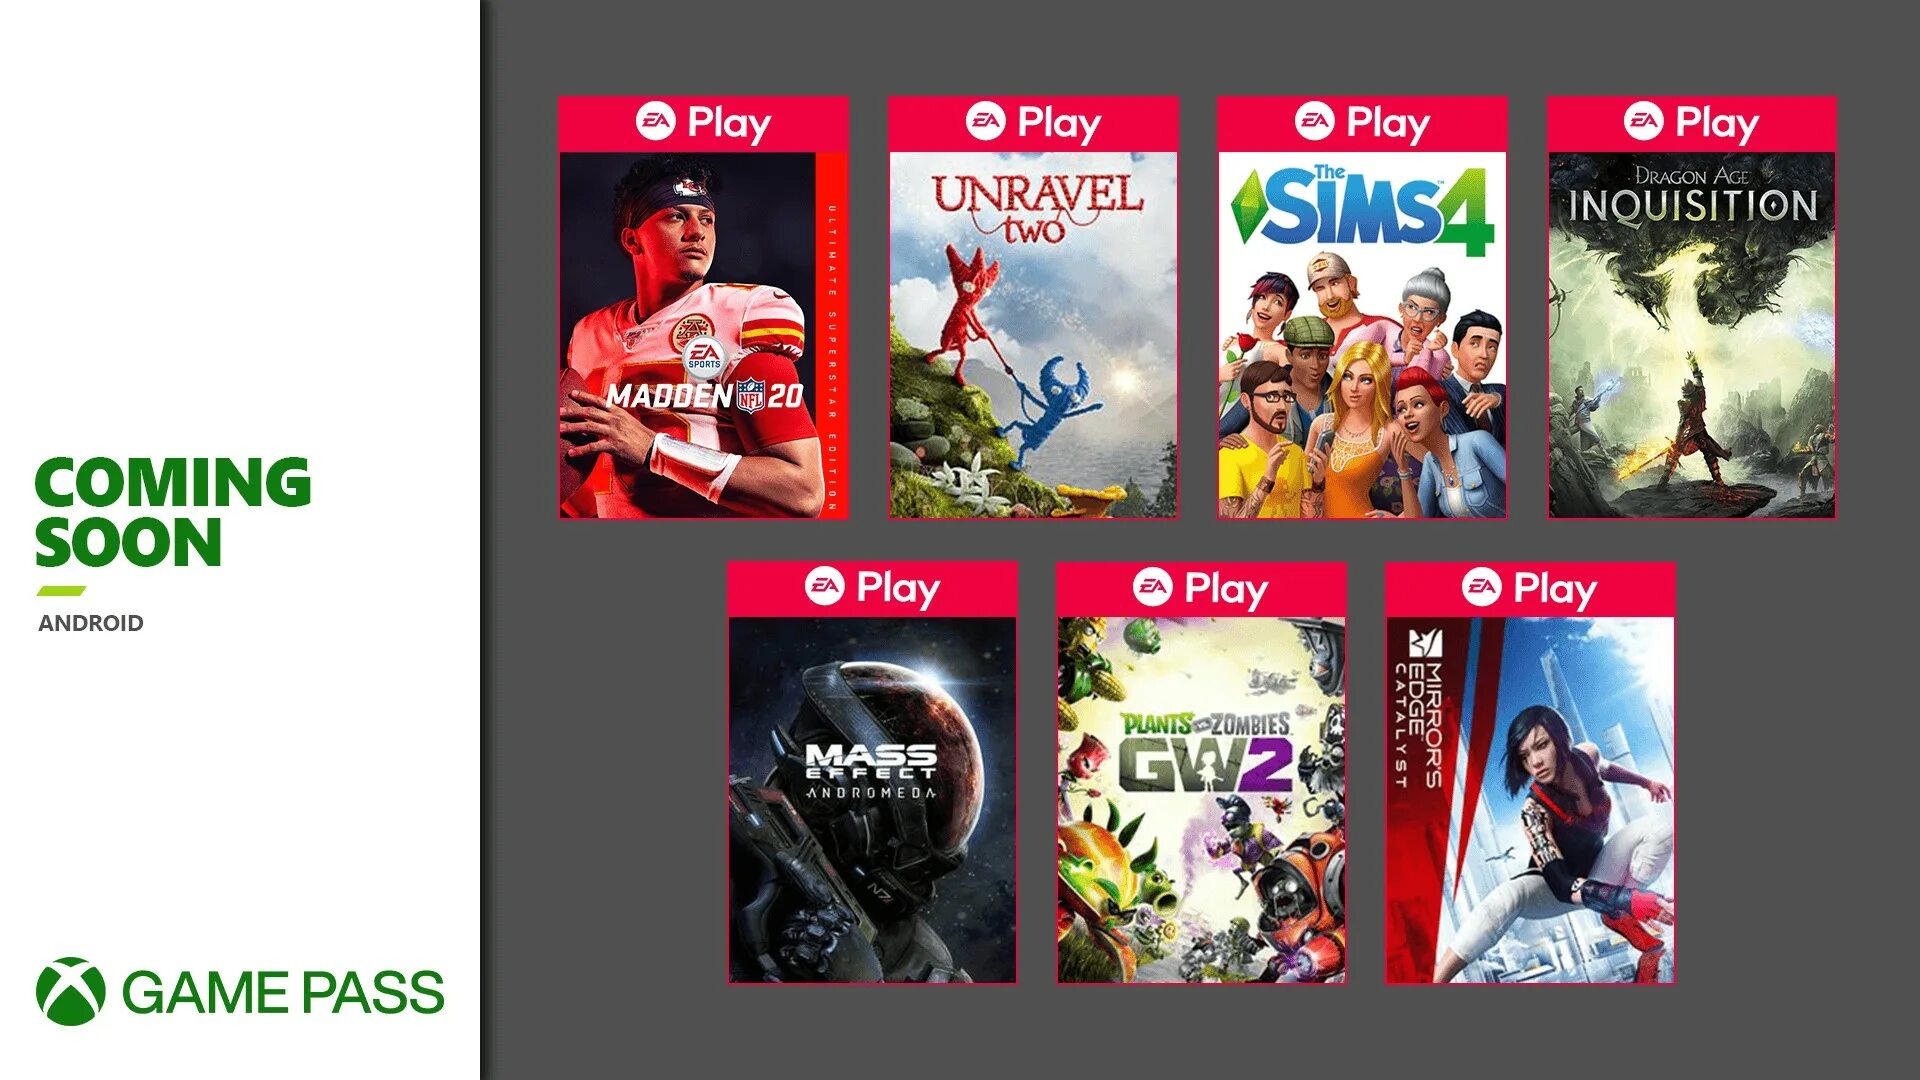 ГЕЙМПАСС Xbox игры. Game Pass Ultimate игры. Xbox game Pass Ultimate. Подписка ультимейт для Xbox.